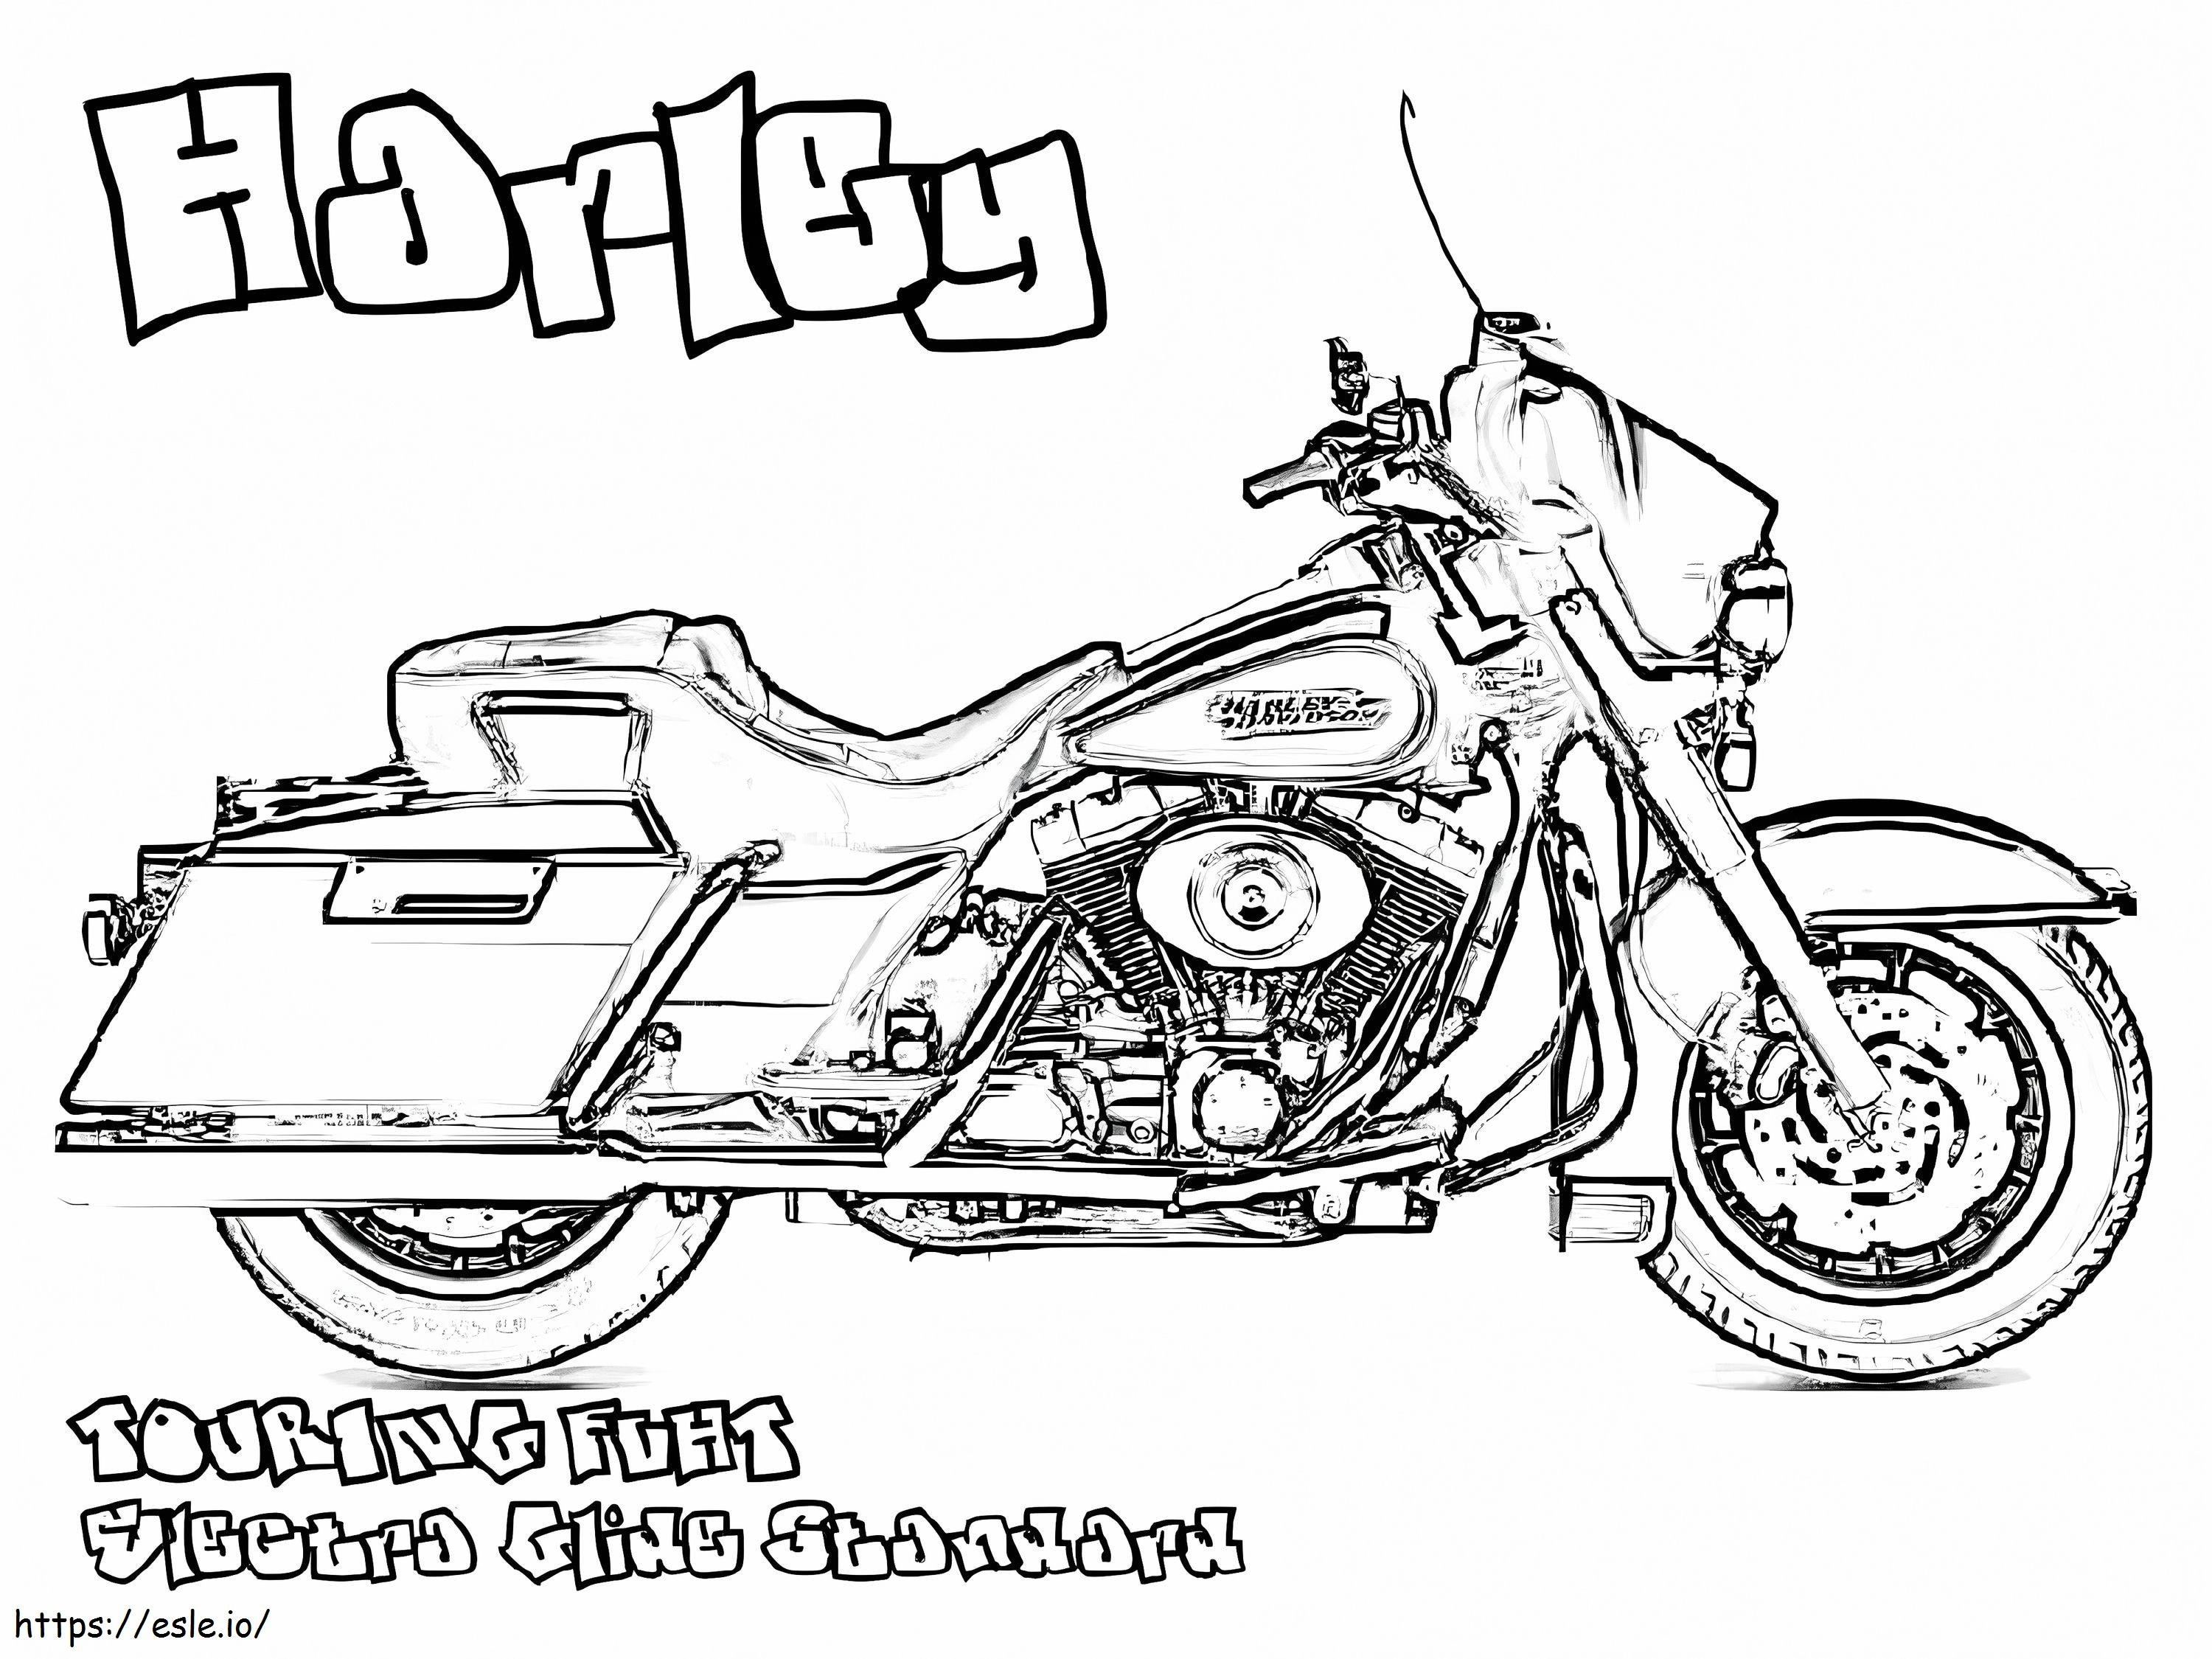 Harley Davidson la culoare de colorat